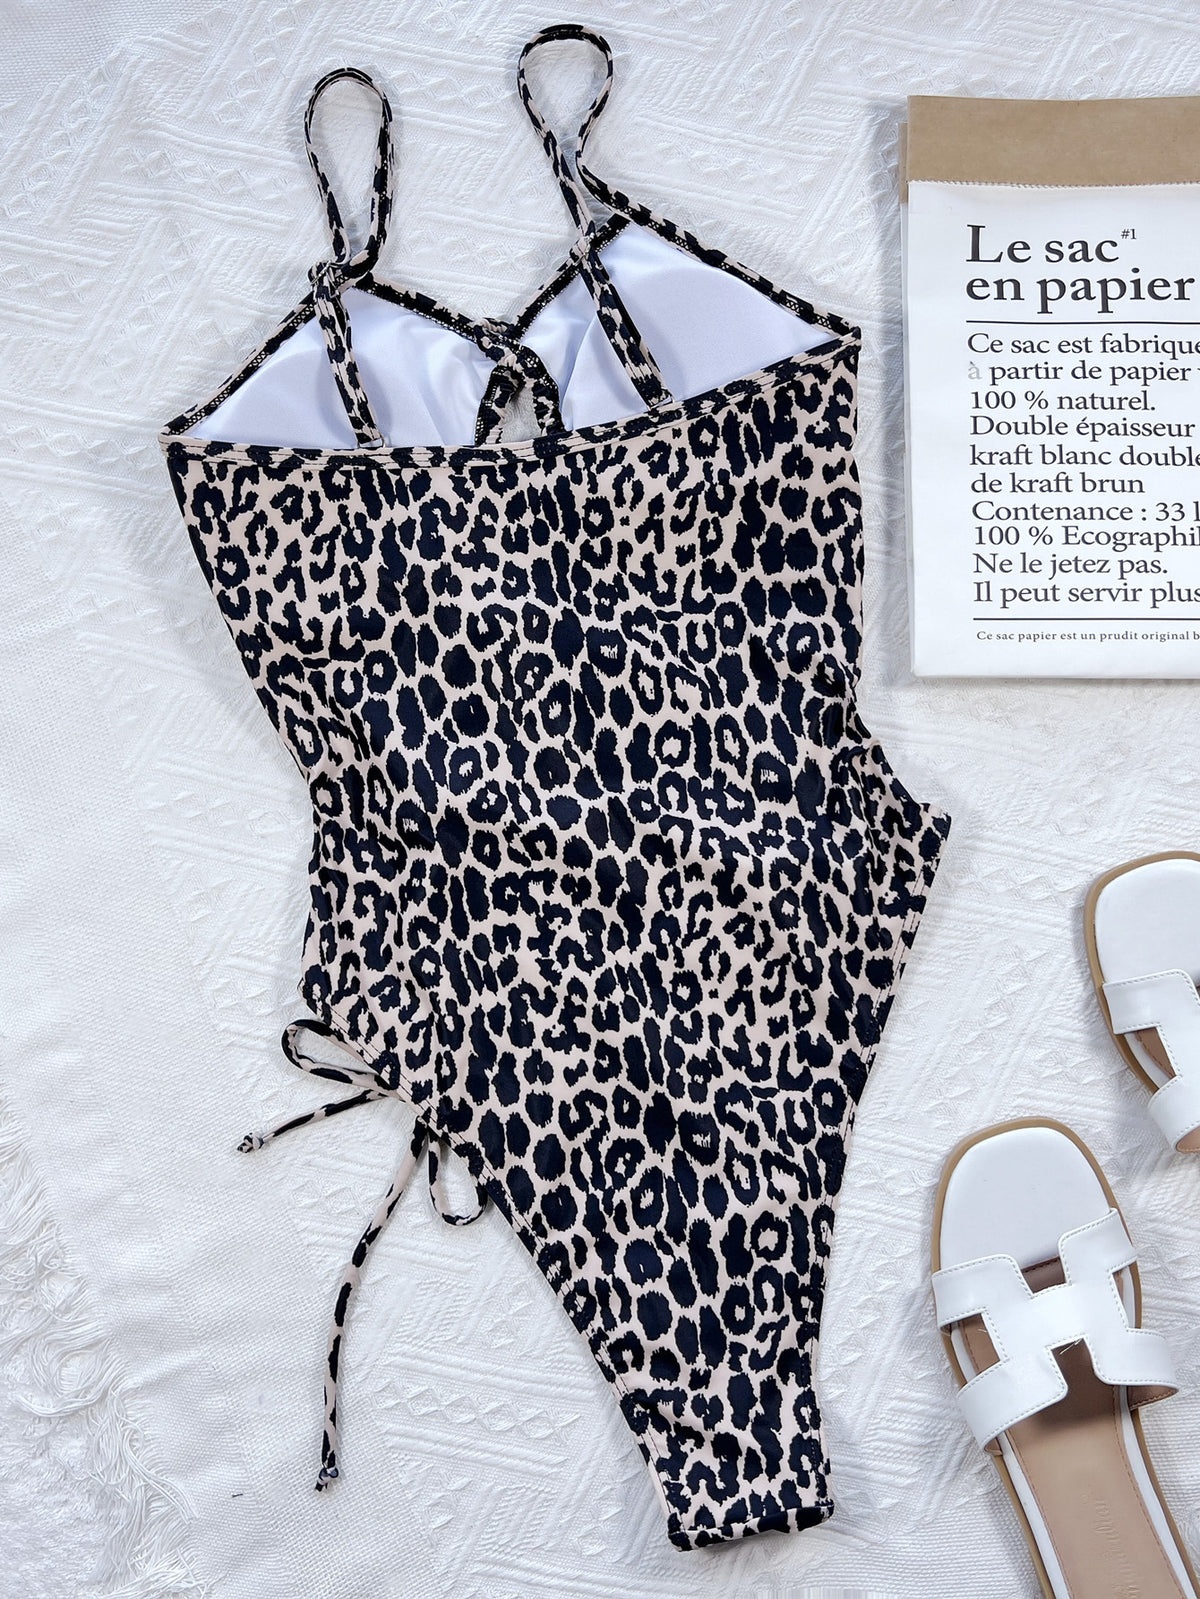 One-Piece Swimsuit Animal Print Leopard Sexy Cutout Bathing-suit Bikini